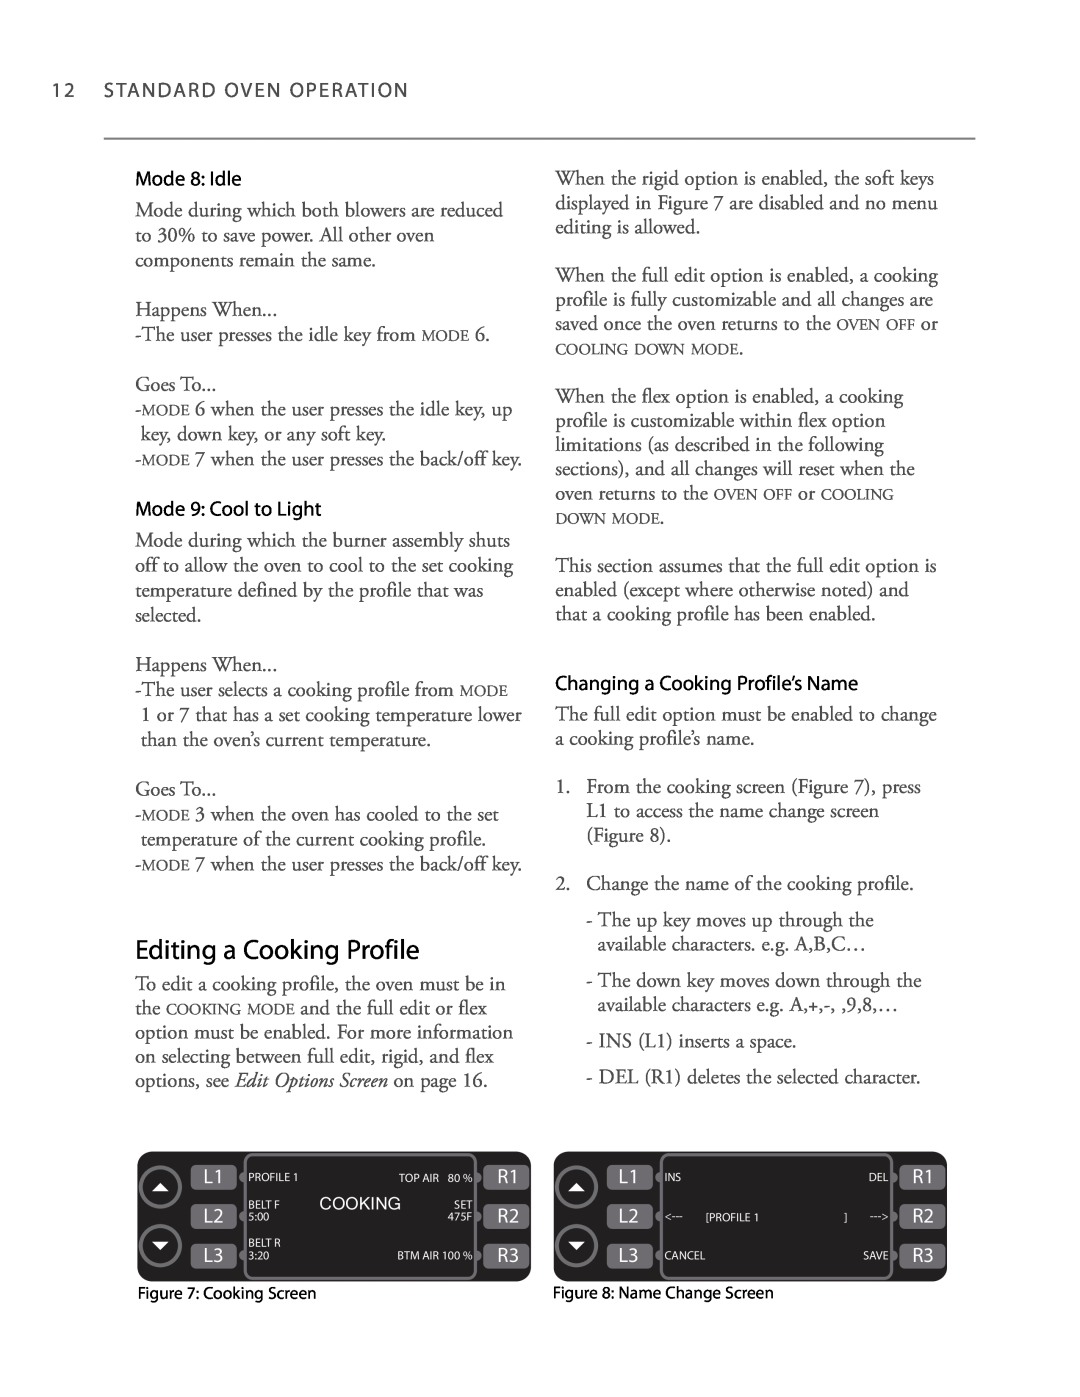 Turbo Chef Technologies 3240 manual Editing a Cooking Profile, L1 L2 L3, R1 R2 R3 